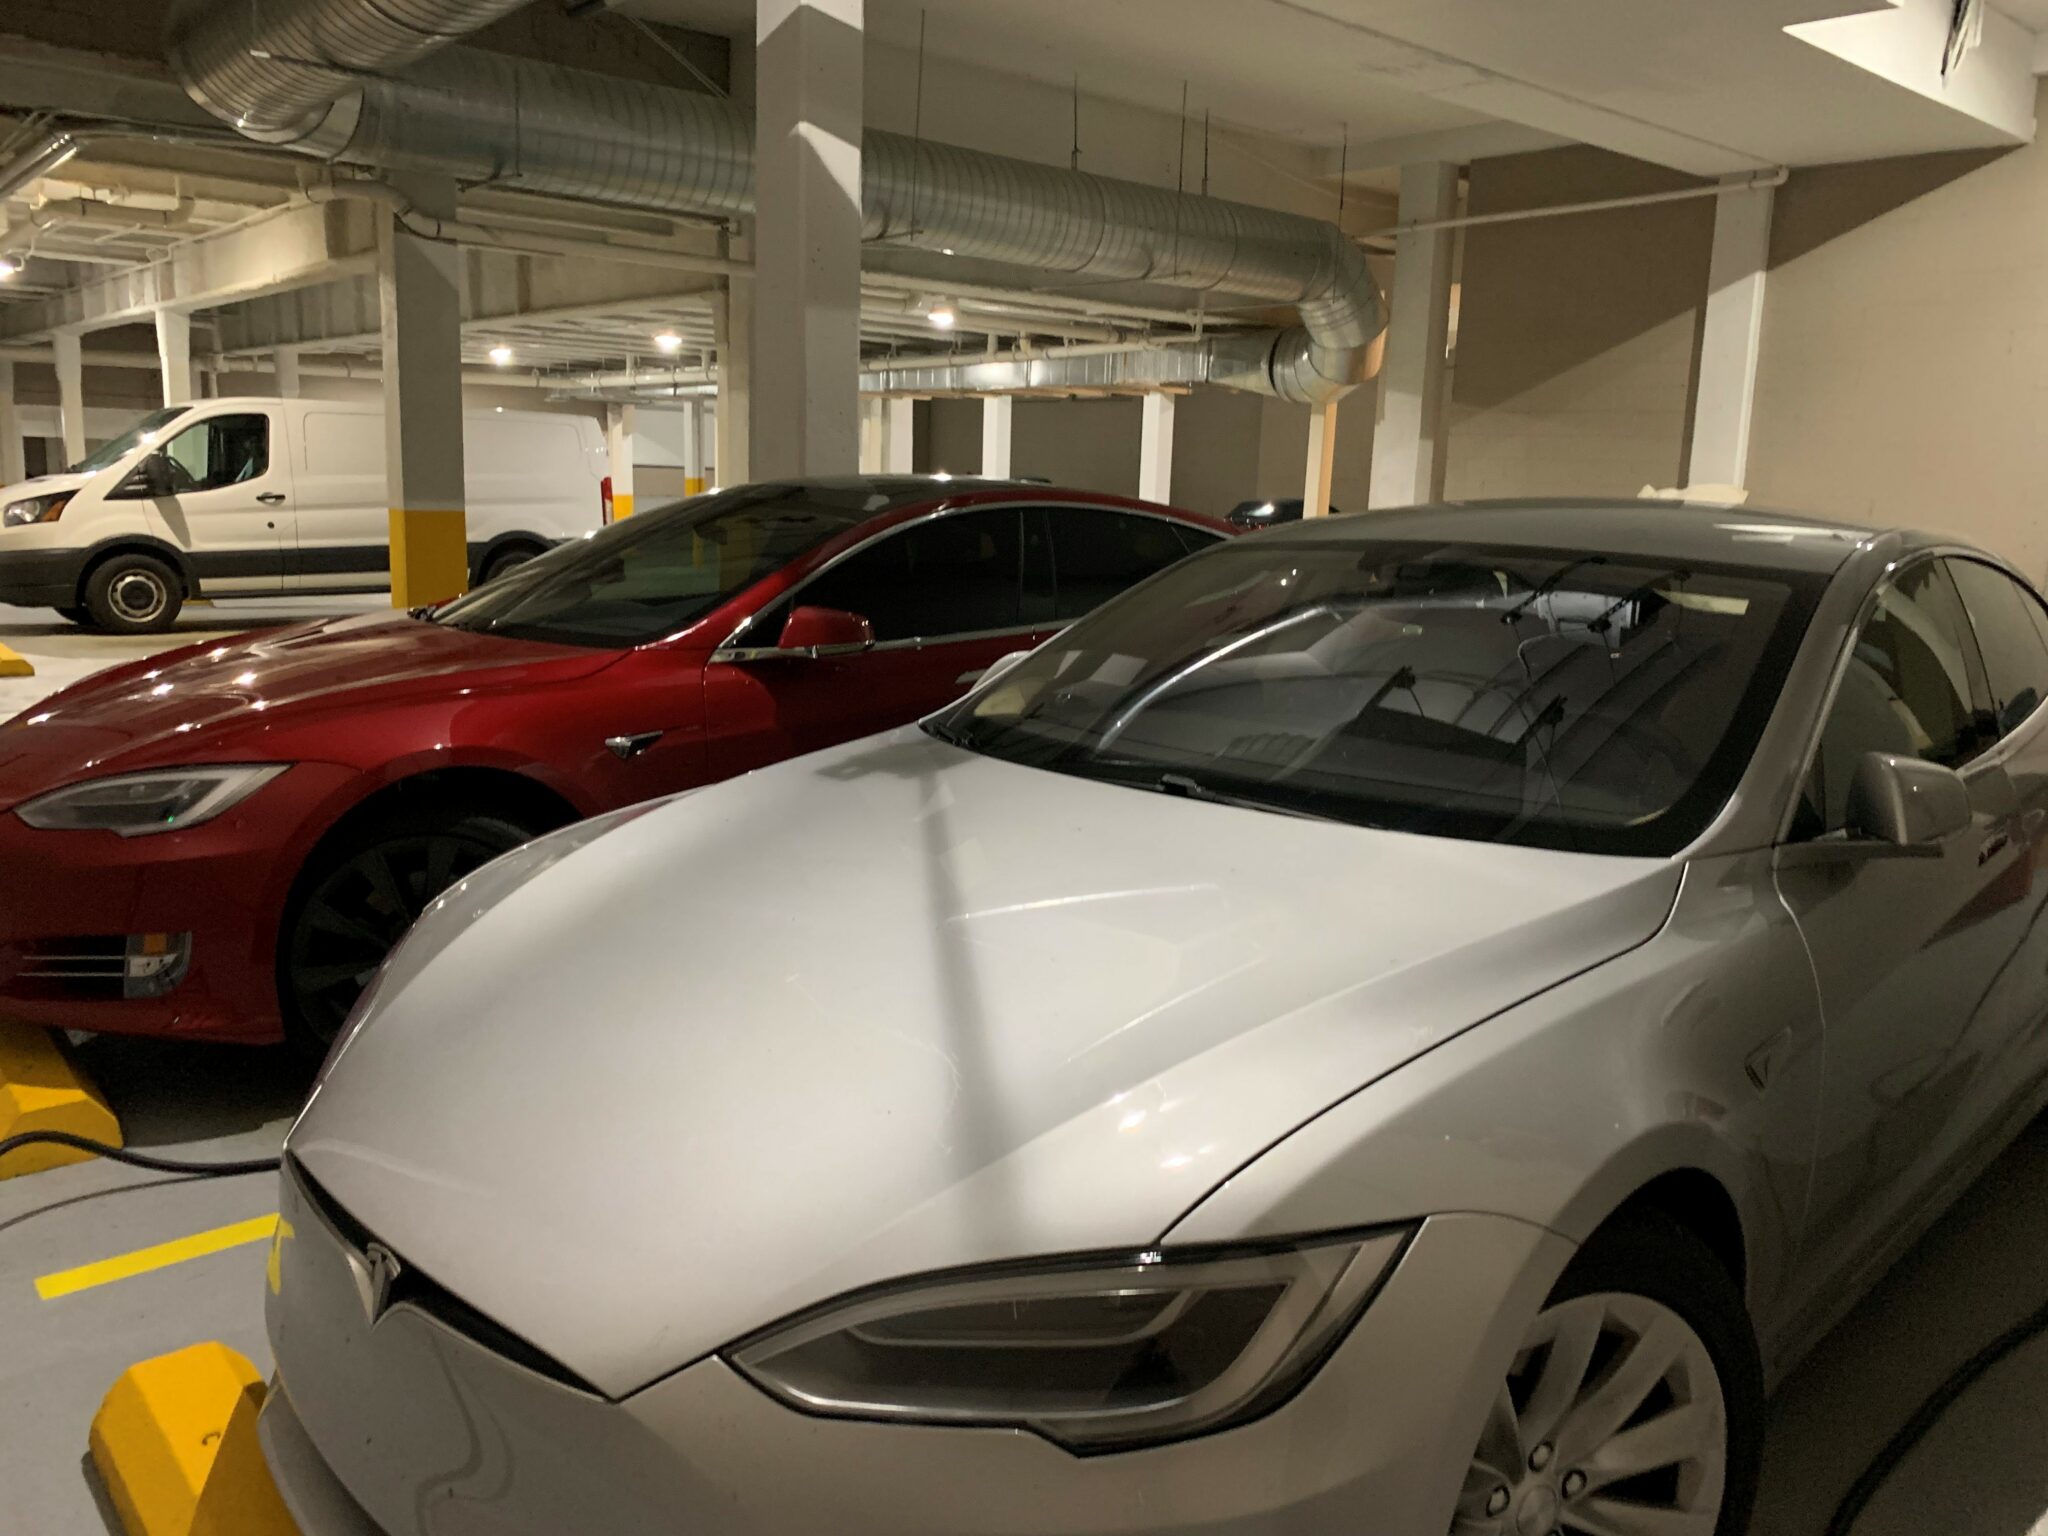 Park on Main Garage - Teslas